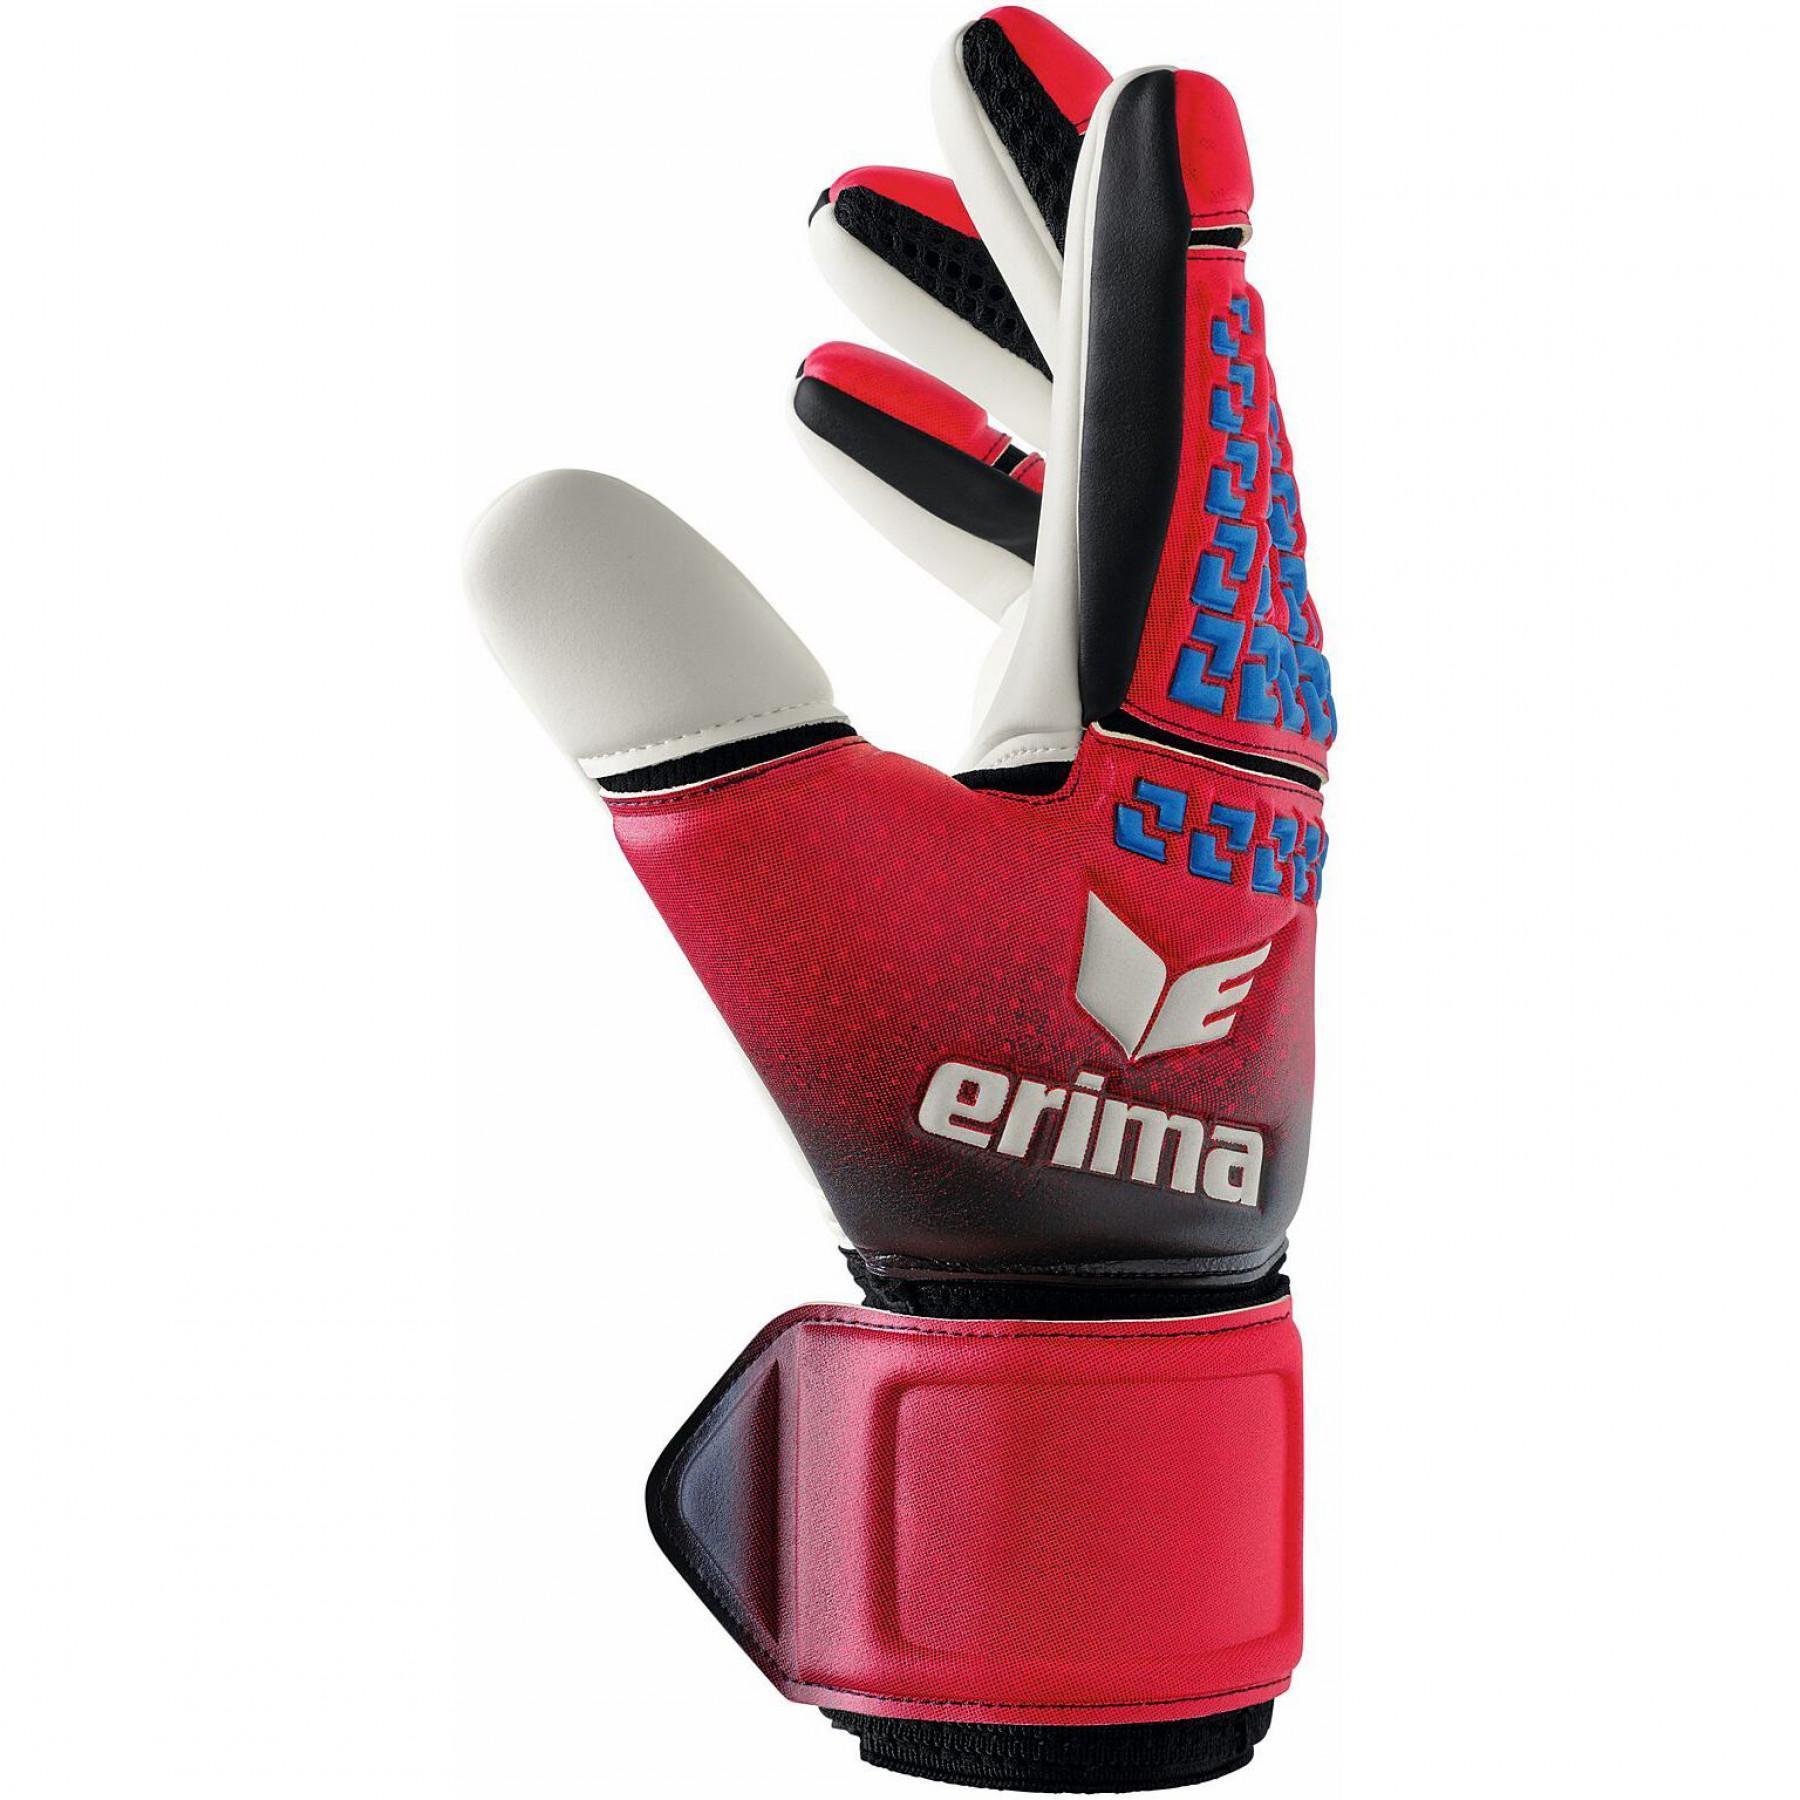 Goalkeeper gloves Erima Skinator Match NF